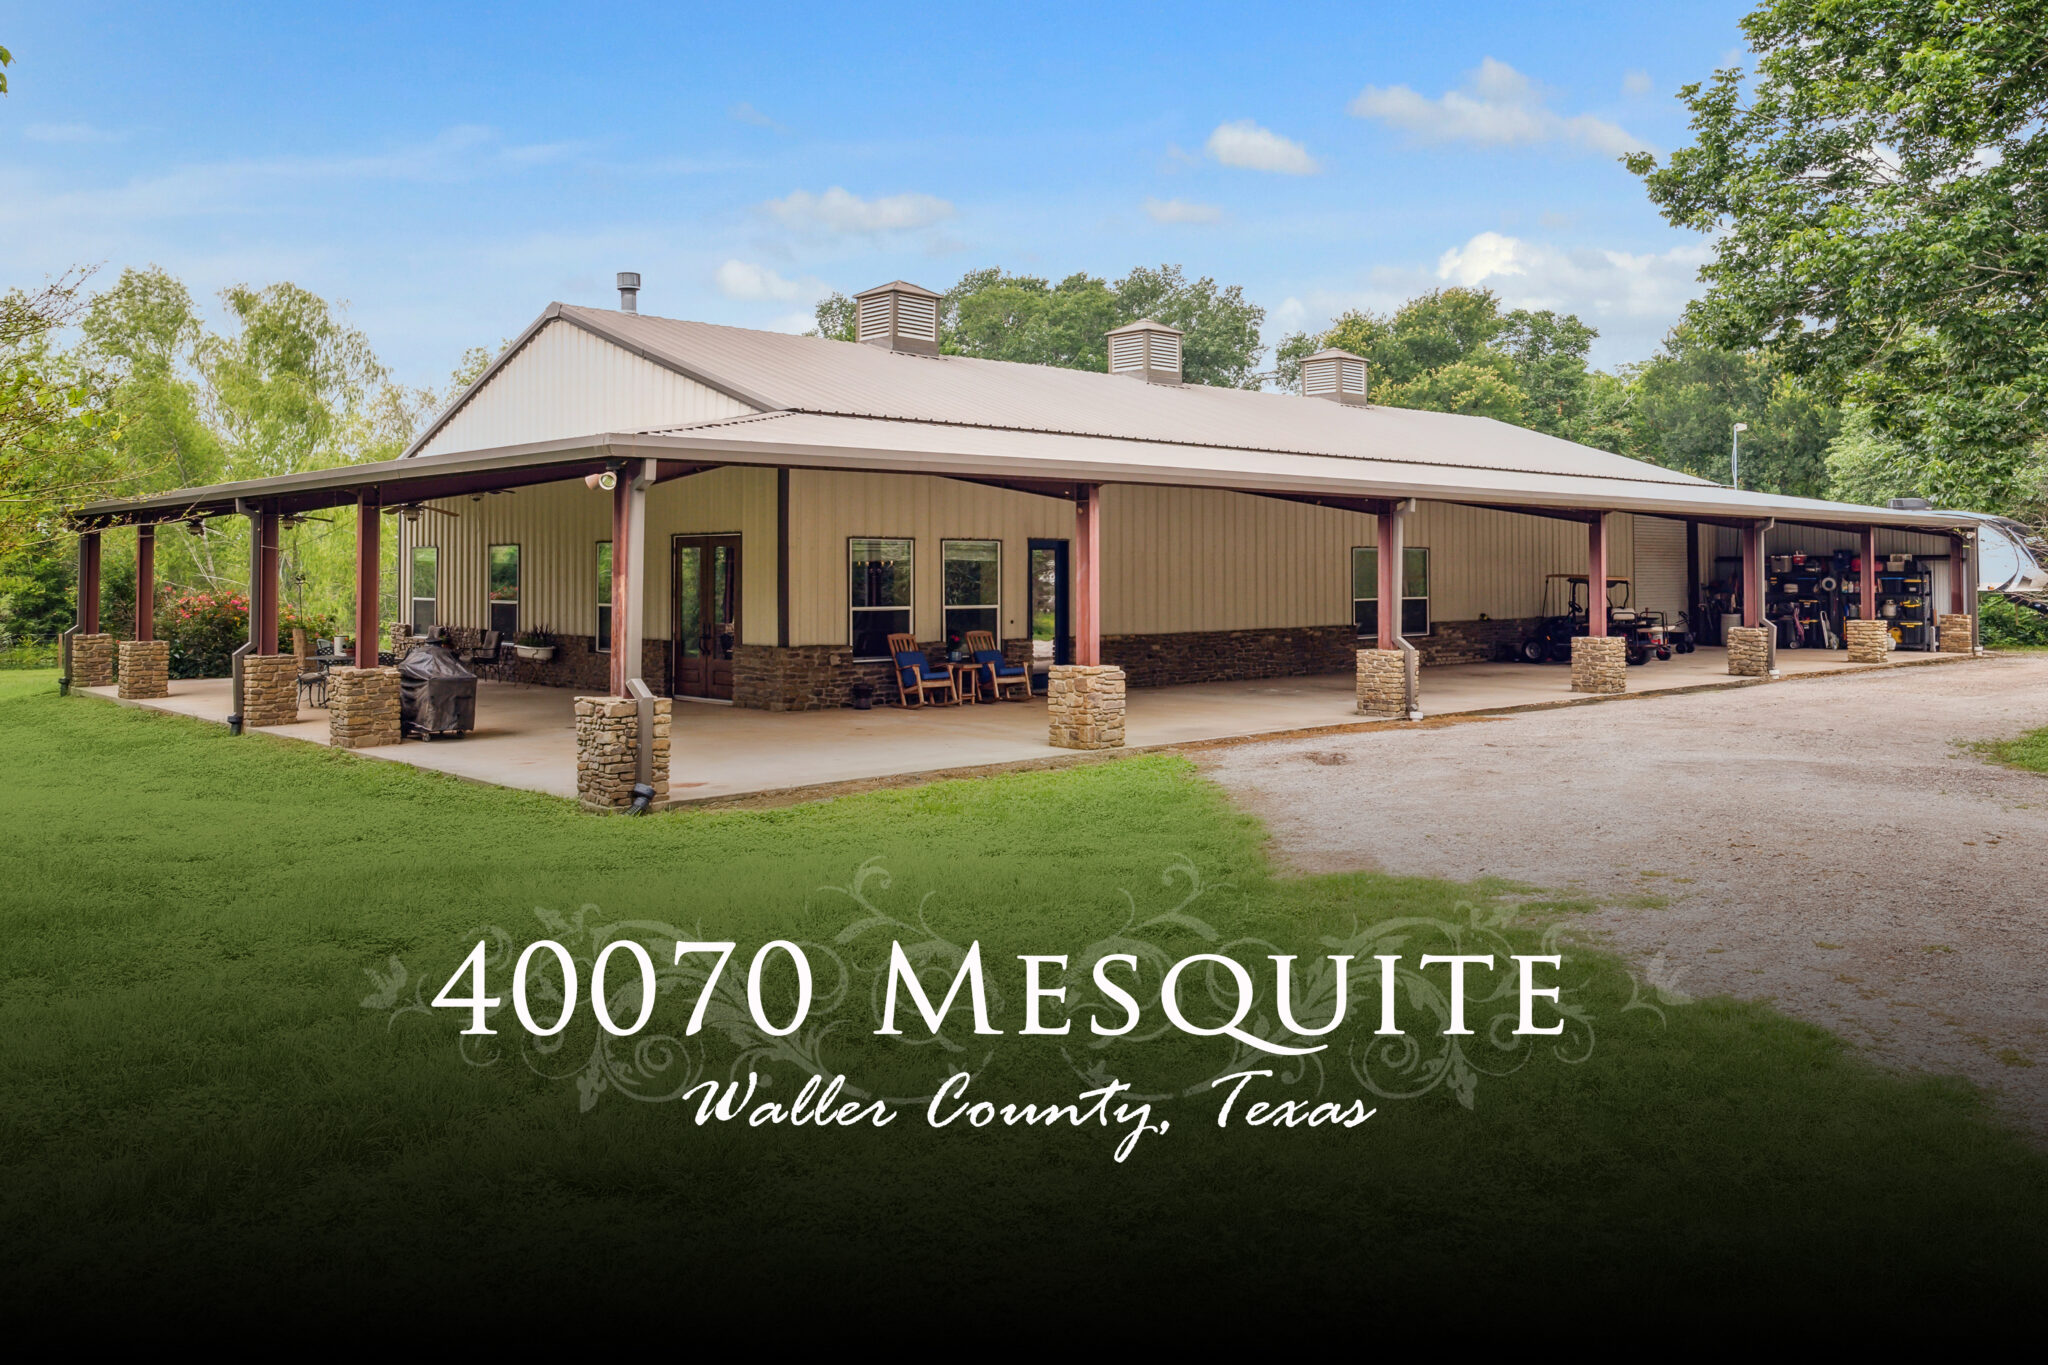 40070 Mesquite Hempstead, Texas 77445